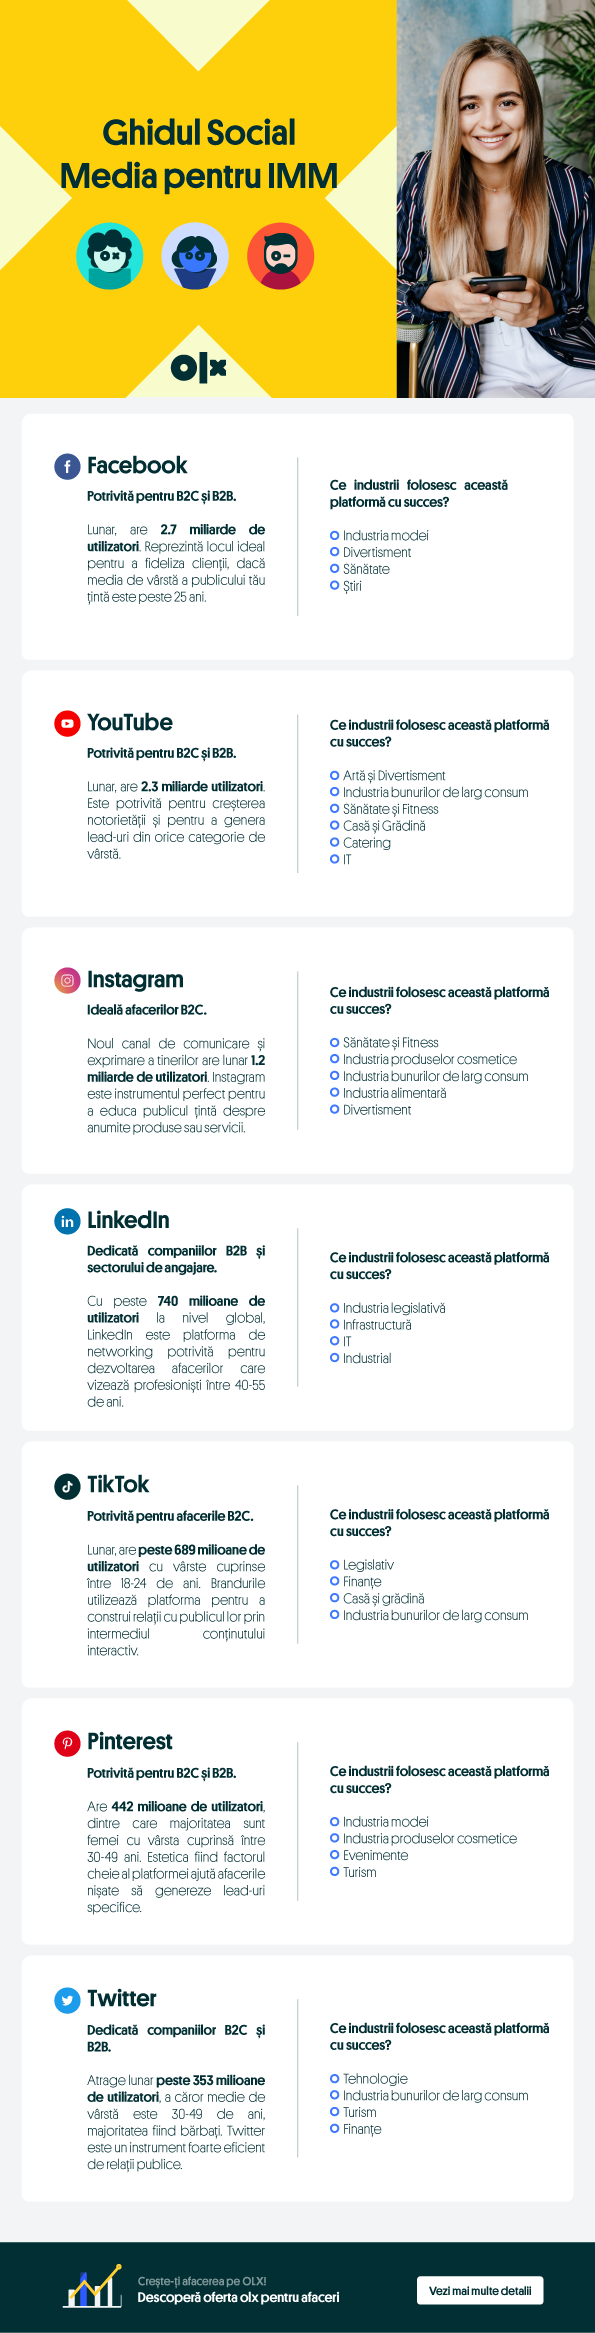 infografic-promovare-social-media-ghid-pentru-imm